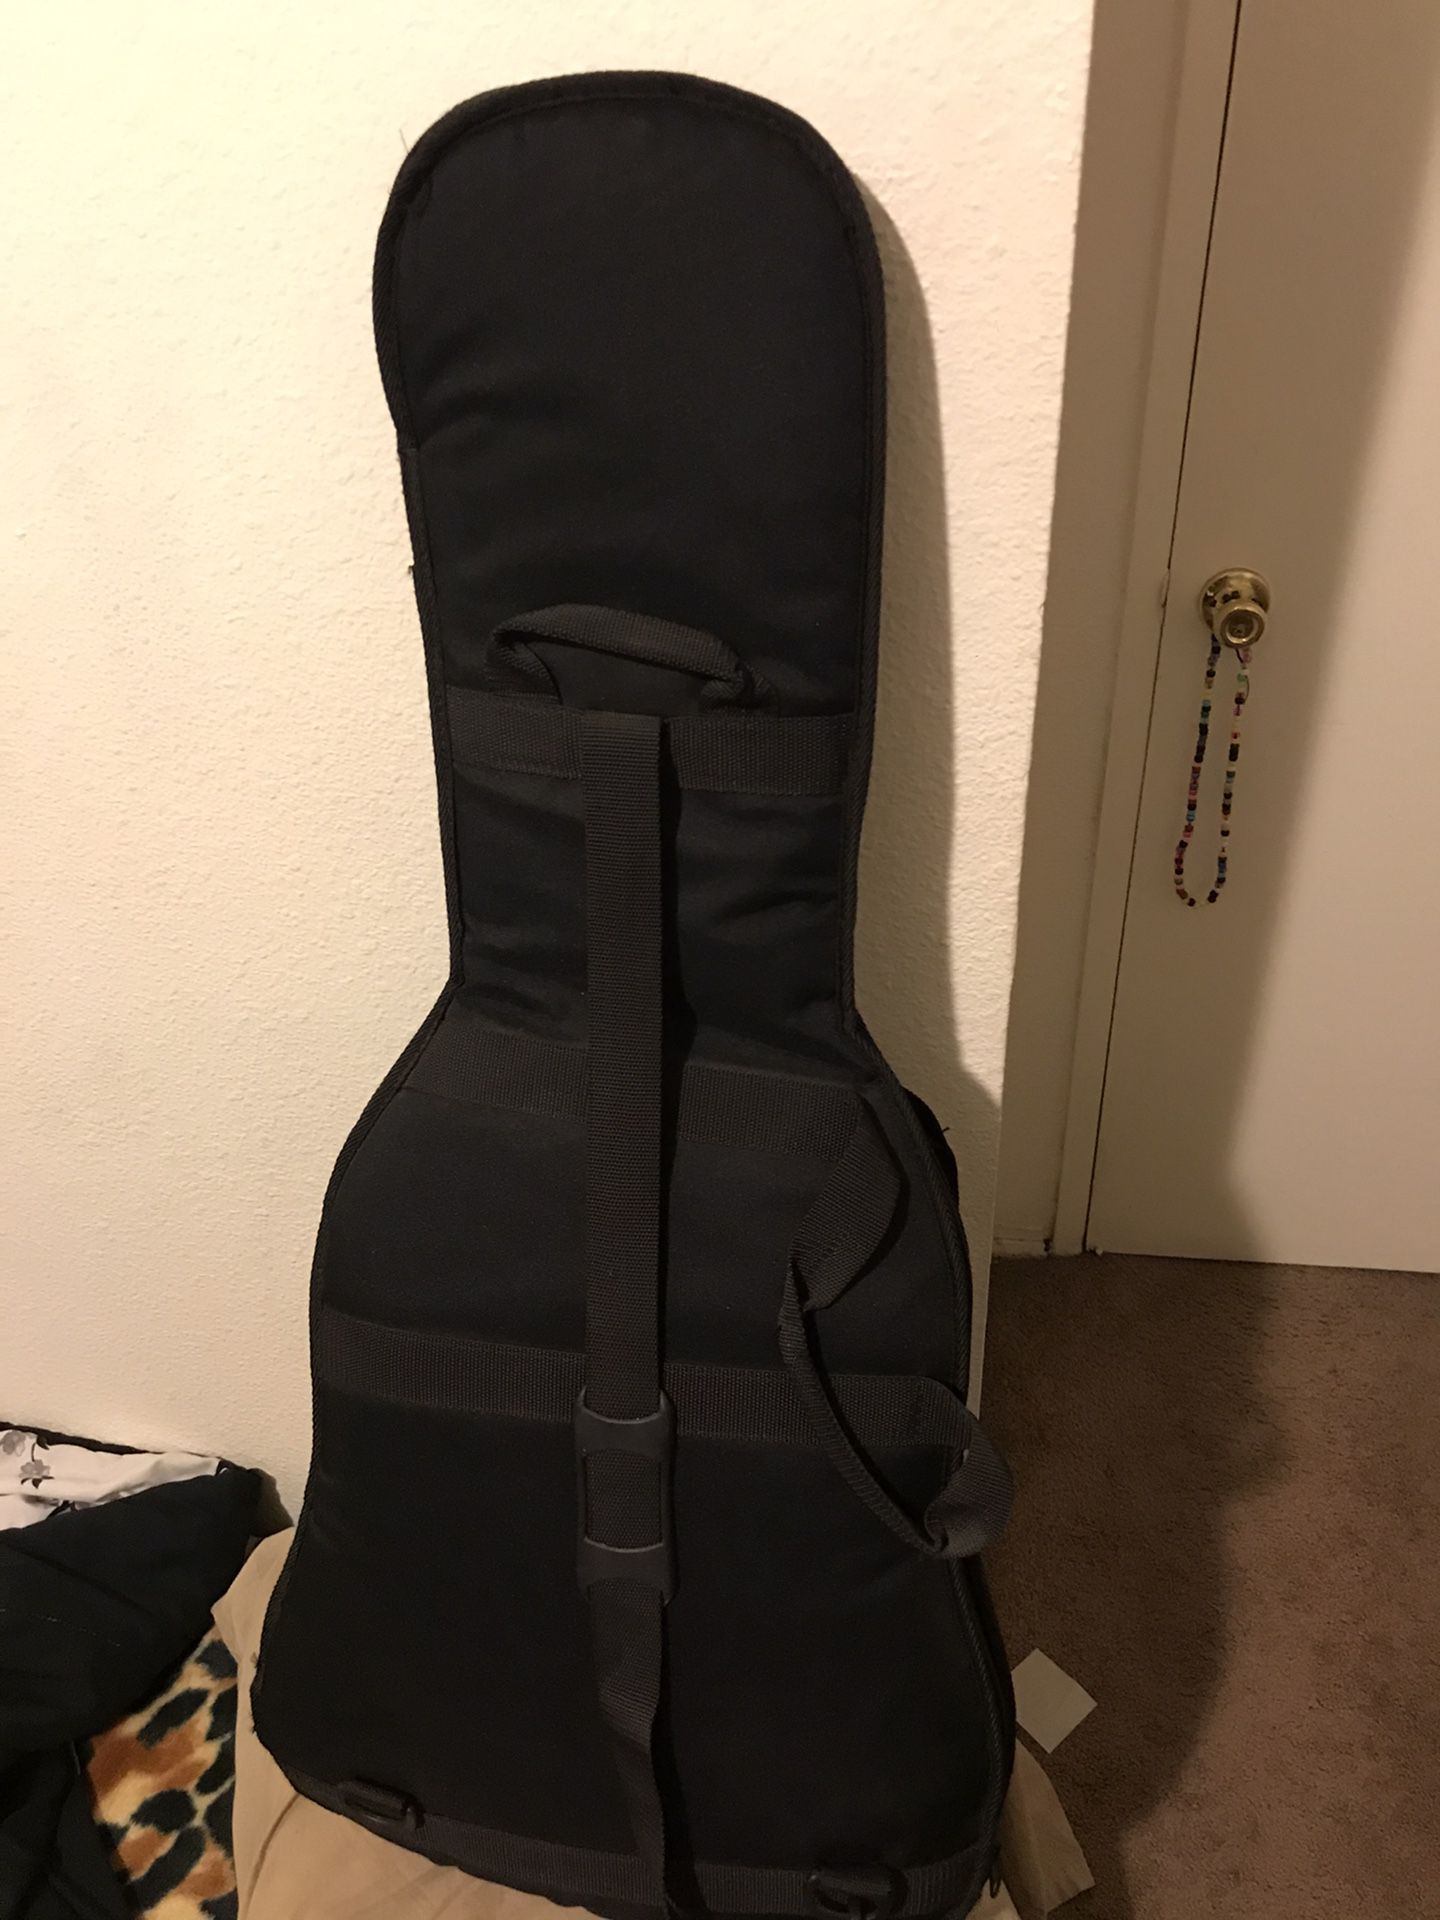 Gig bag ( guitar bag )